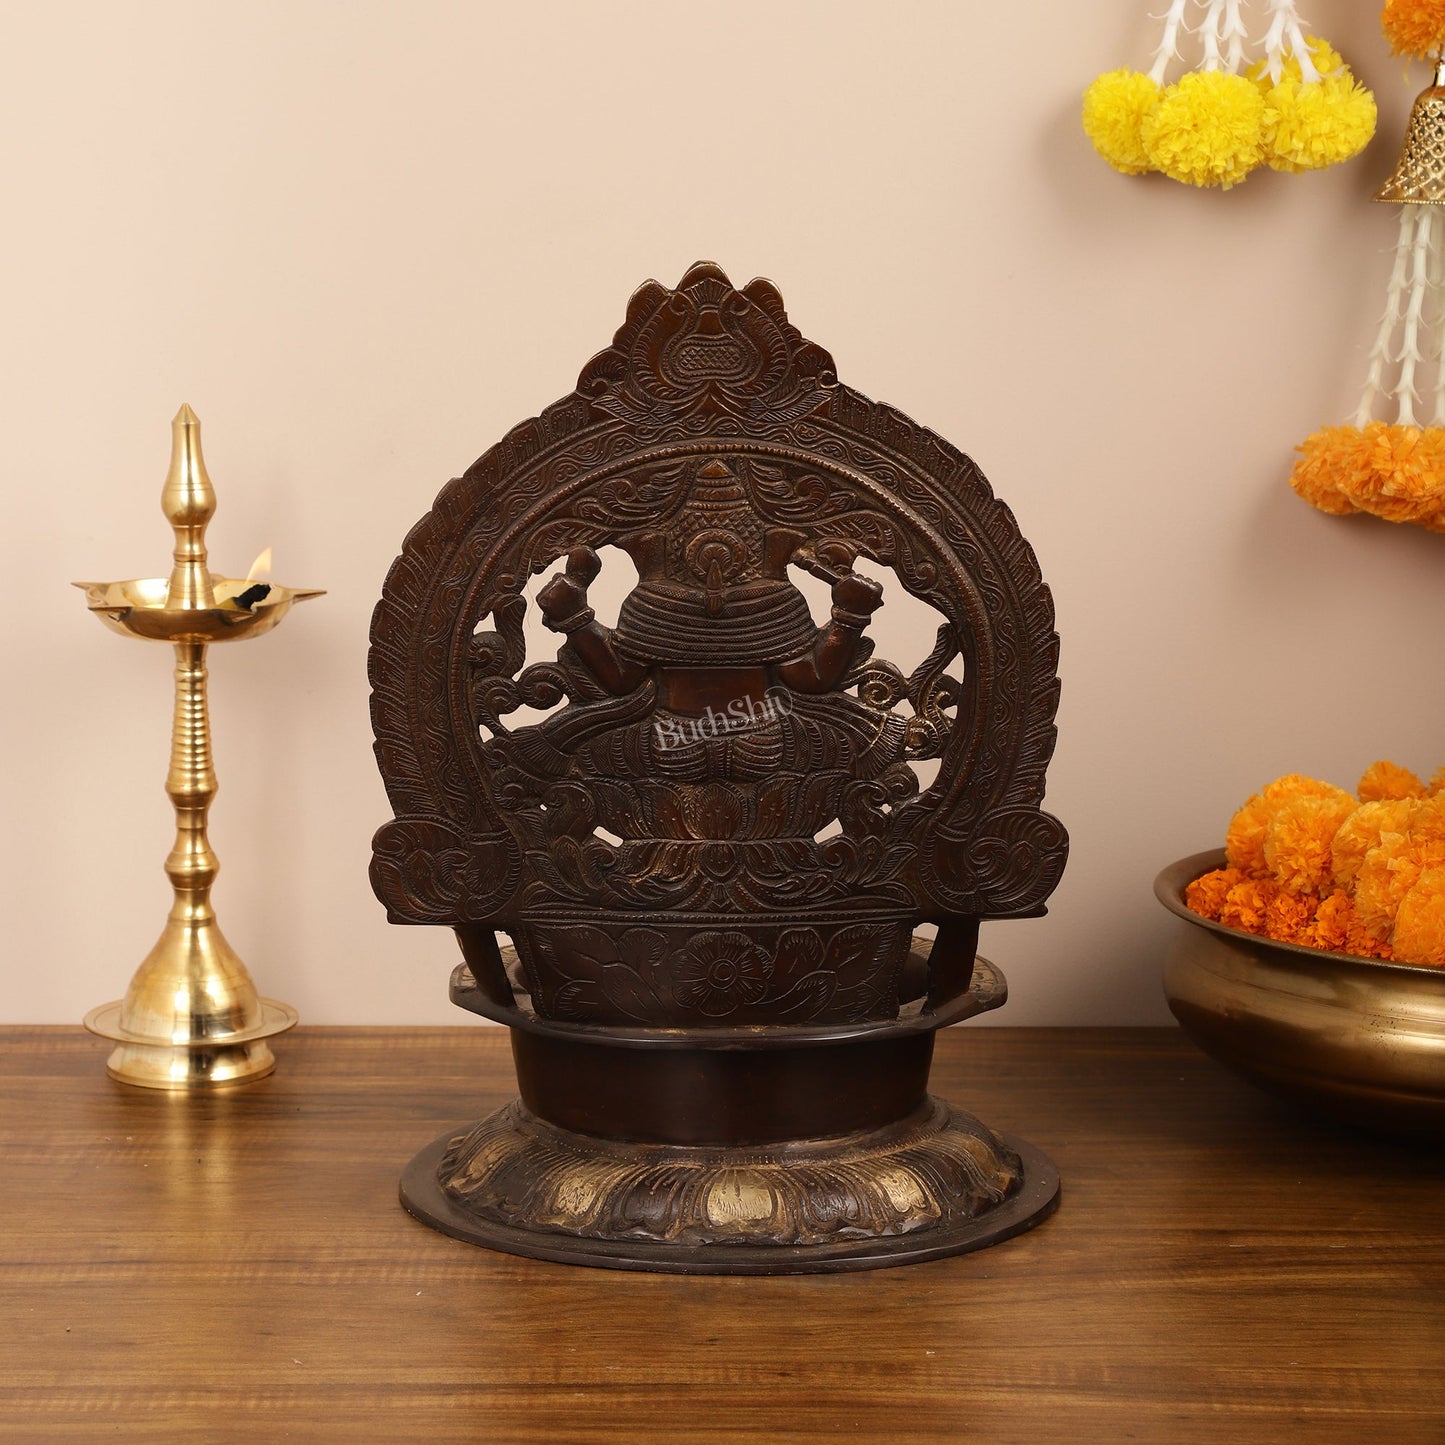 Brass Large-Sized Ganesha Lamp - 16 Inch - Budhshiv.com